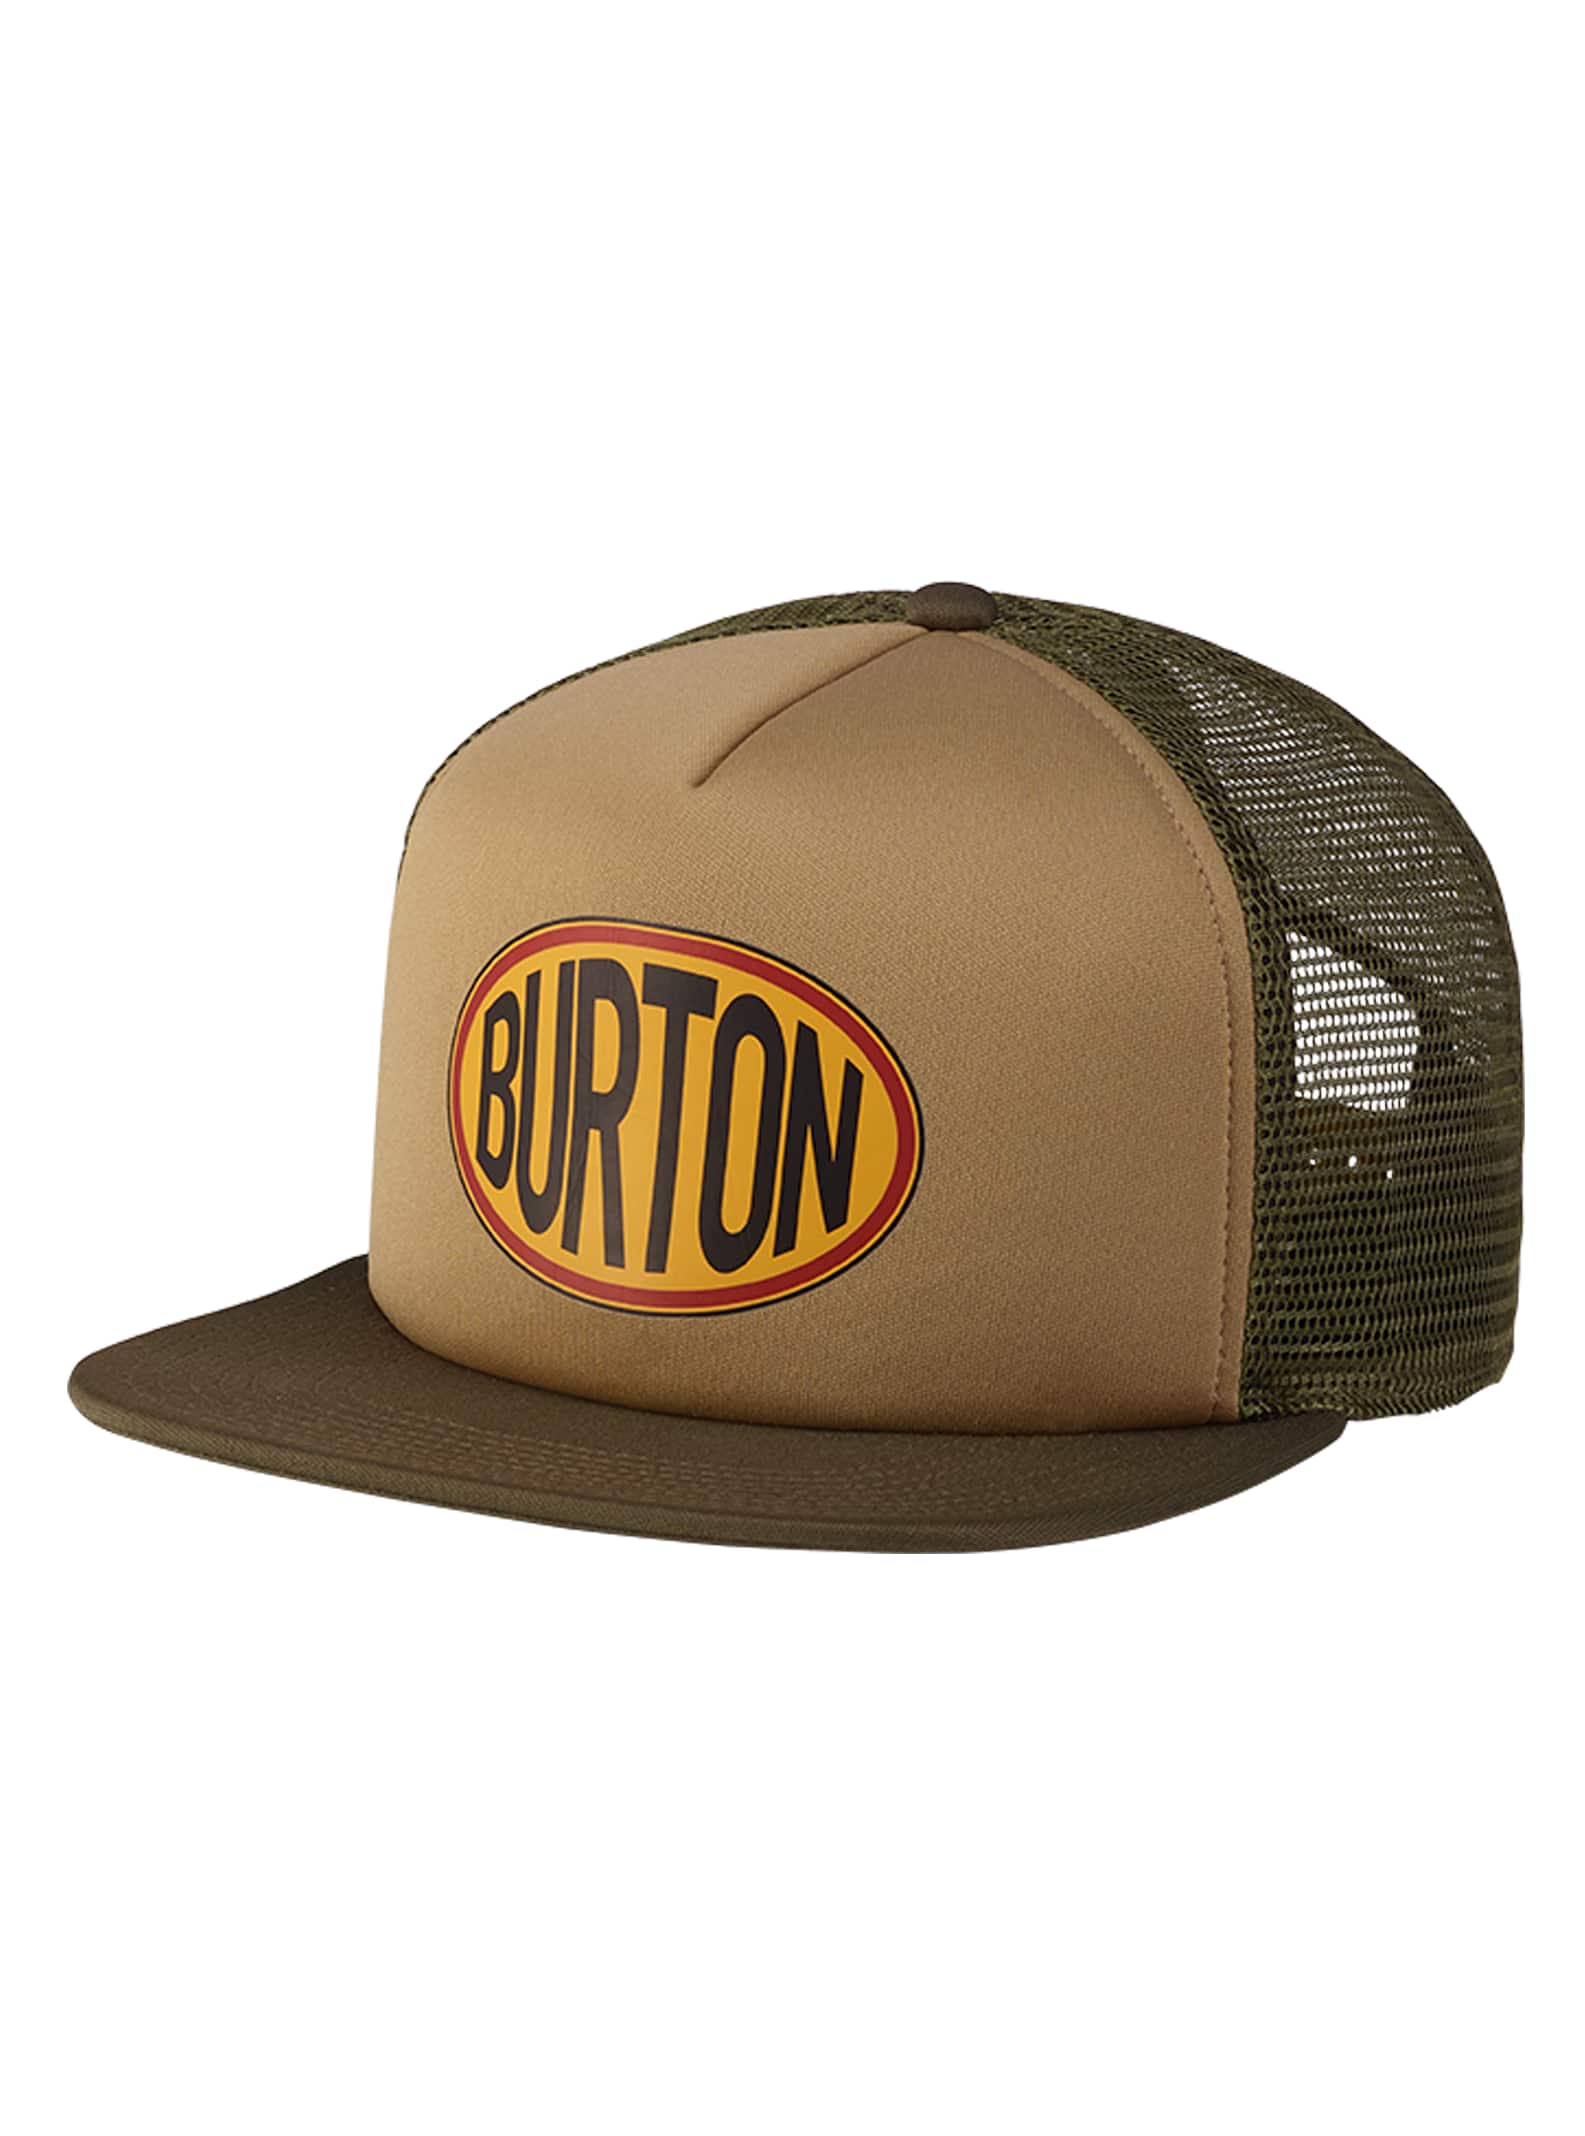 Burton I-80 Snapback Trucker Hat | Burton.com Winter 2020 US